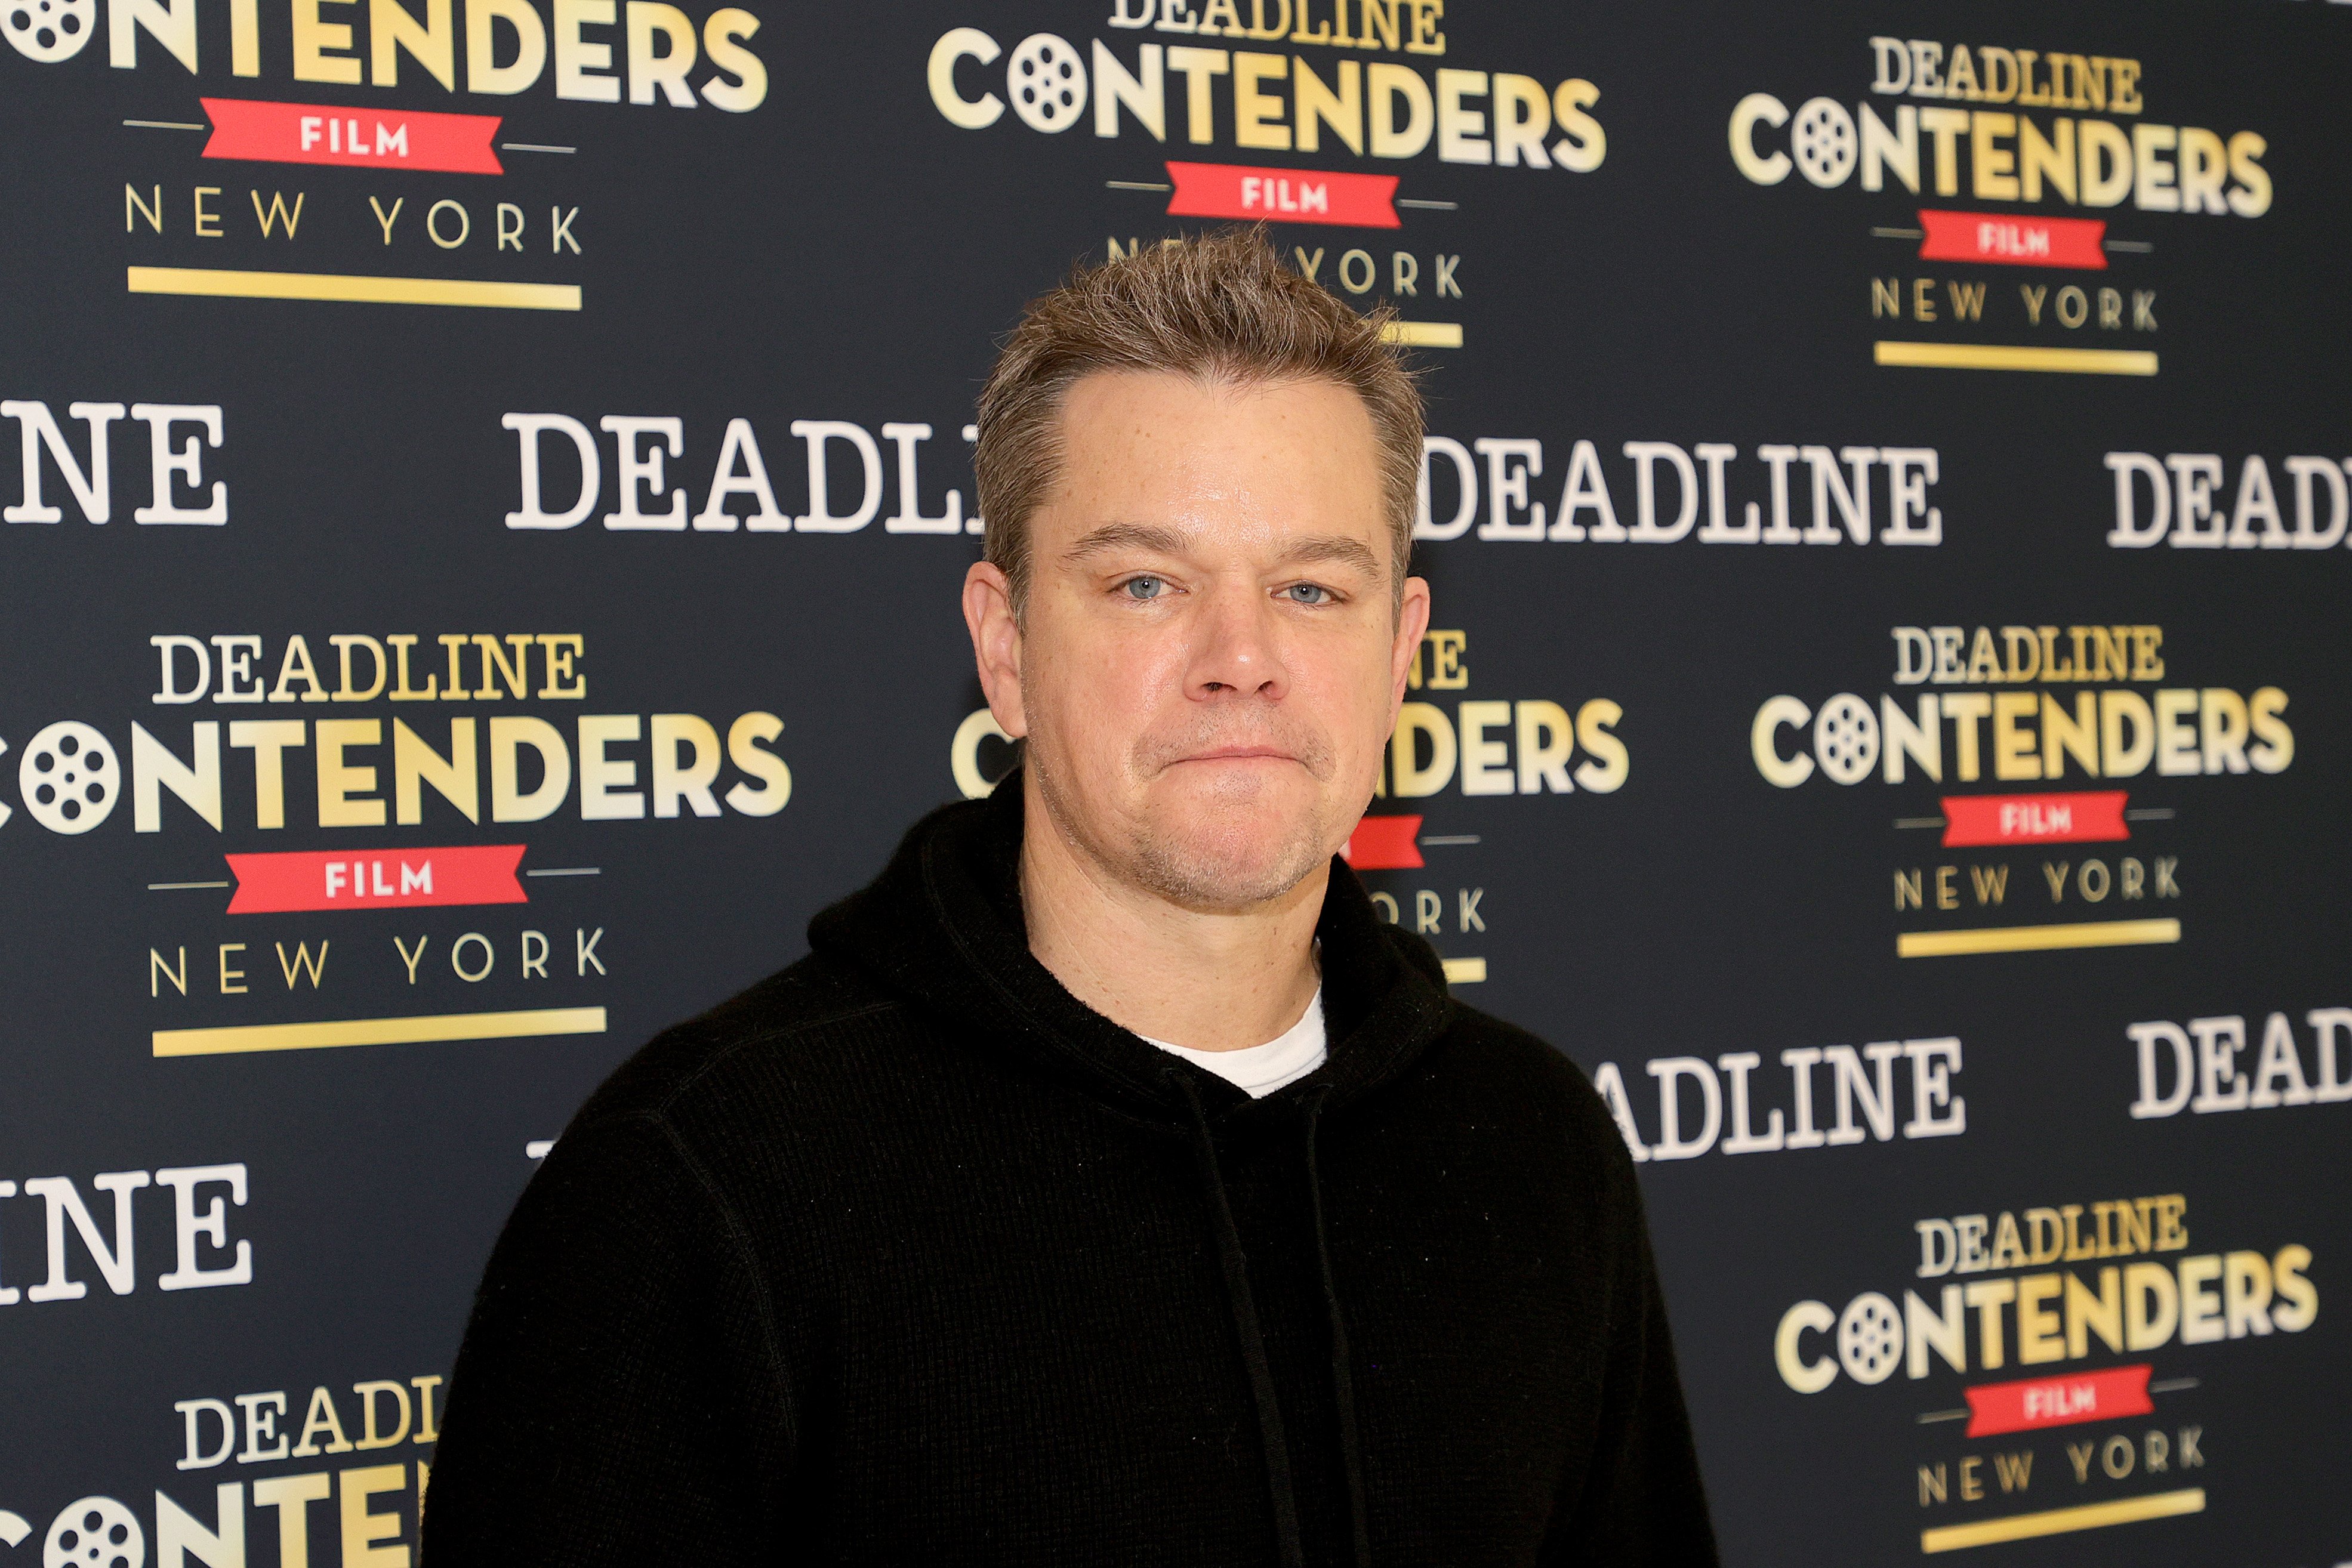 Matt Damon de "Stillwater" de Focus Features en "Deadline Contenders Film: New York", el 4 de diciembre de 2021, en Nueva York. | Foto: Getty Images